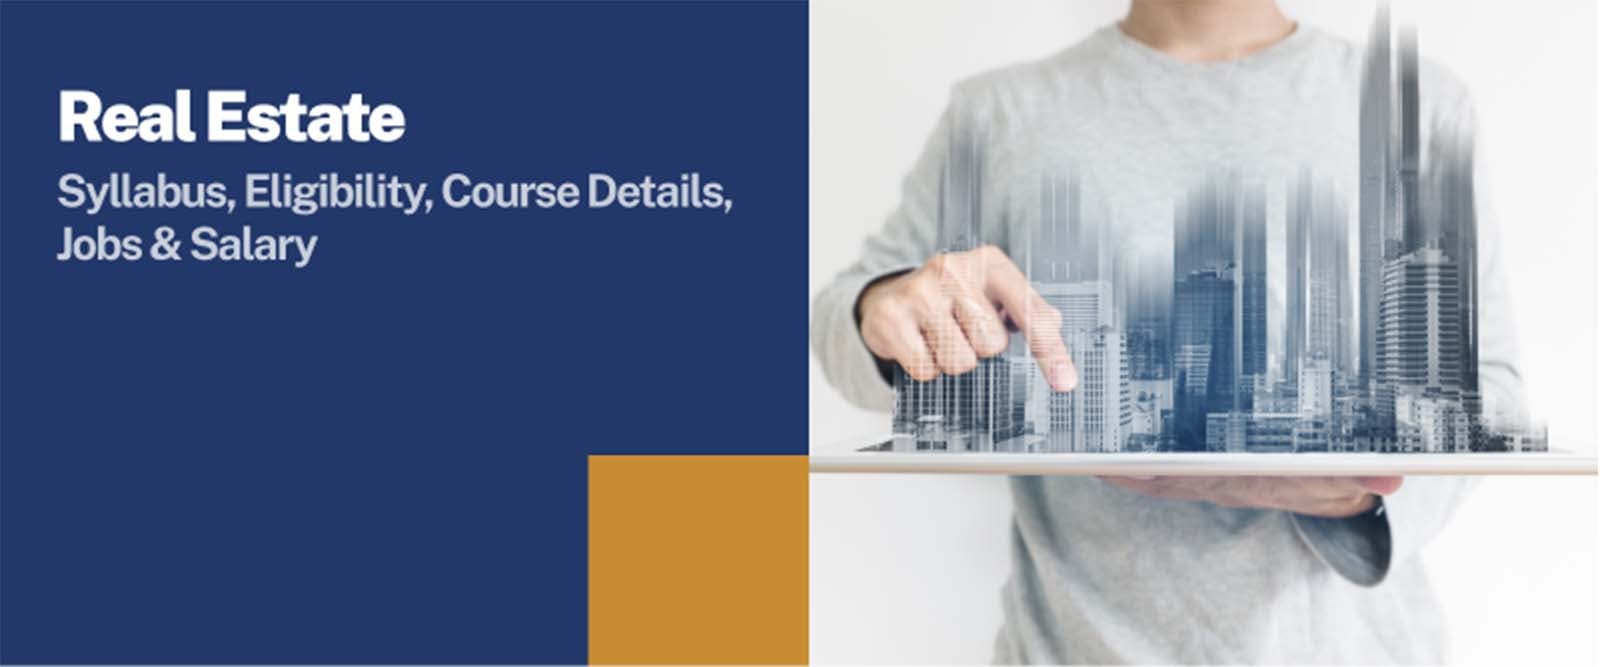 MBA Real Estate: Syllabus, Eligibility, Course Details, Jobs & Salary